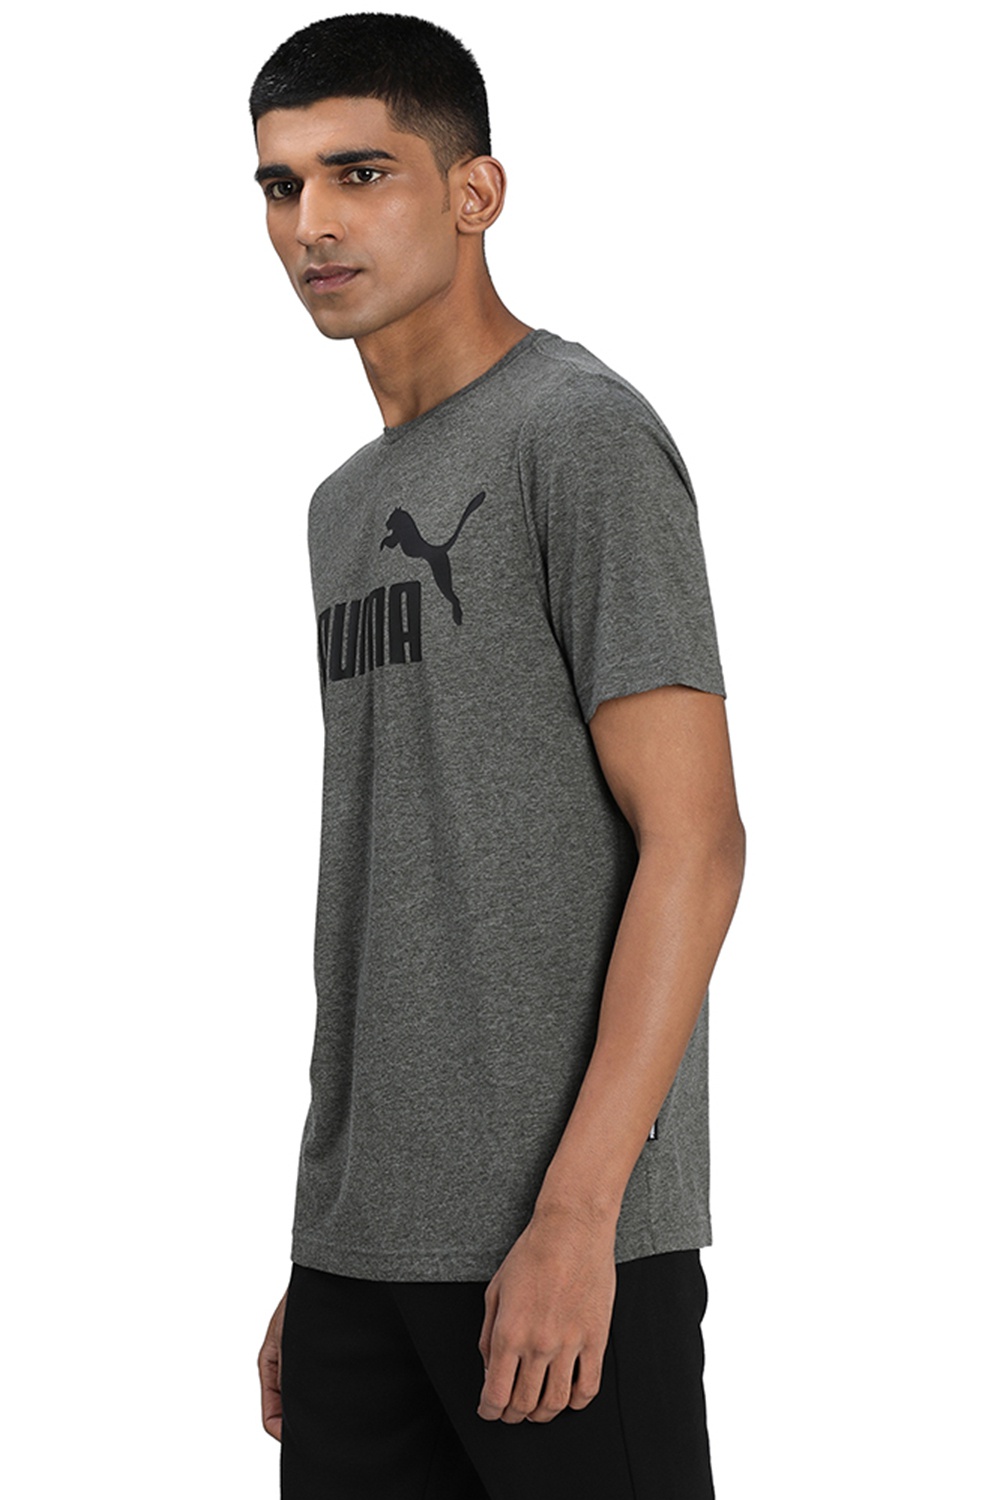 Puma Solid Color Lifestyle Logo Men\'s Short Sleeves T-Shirt